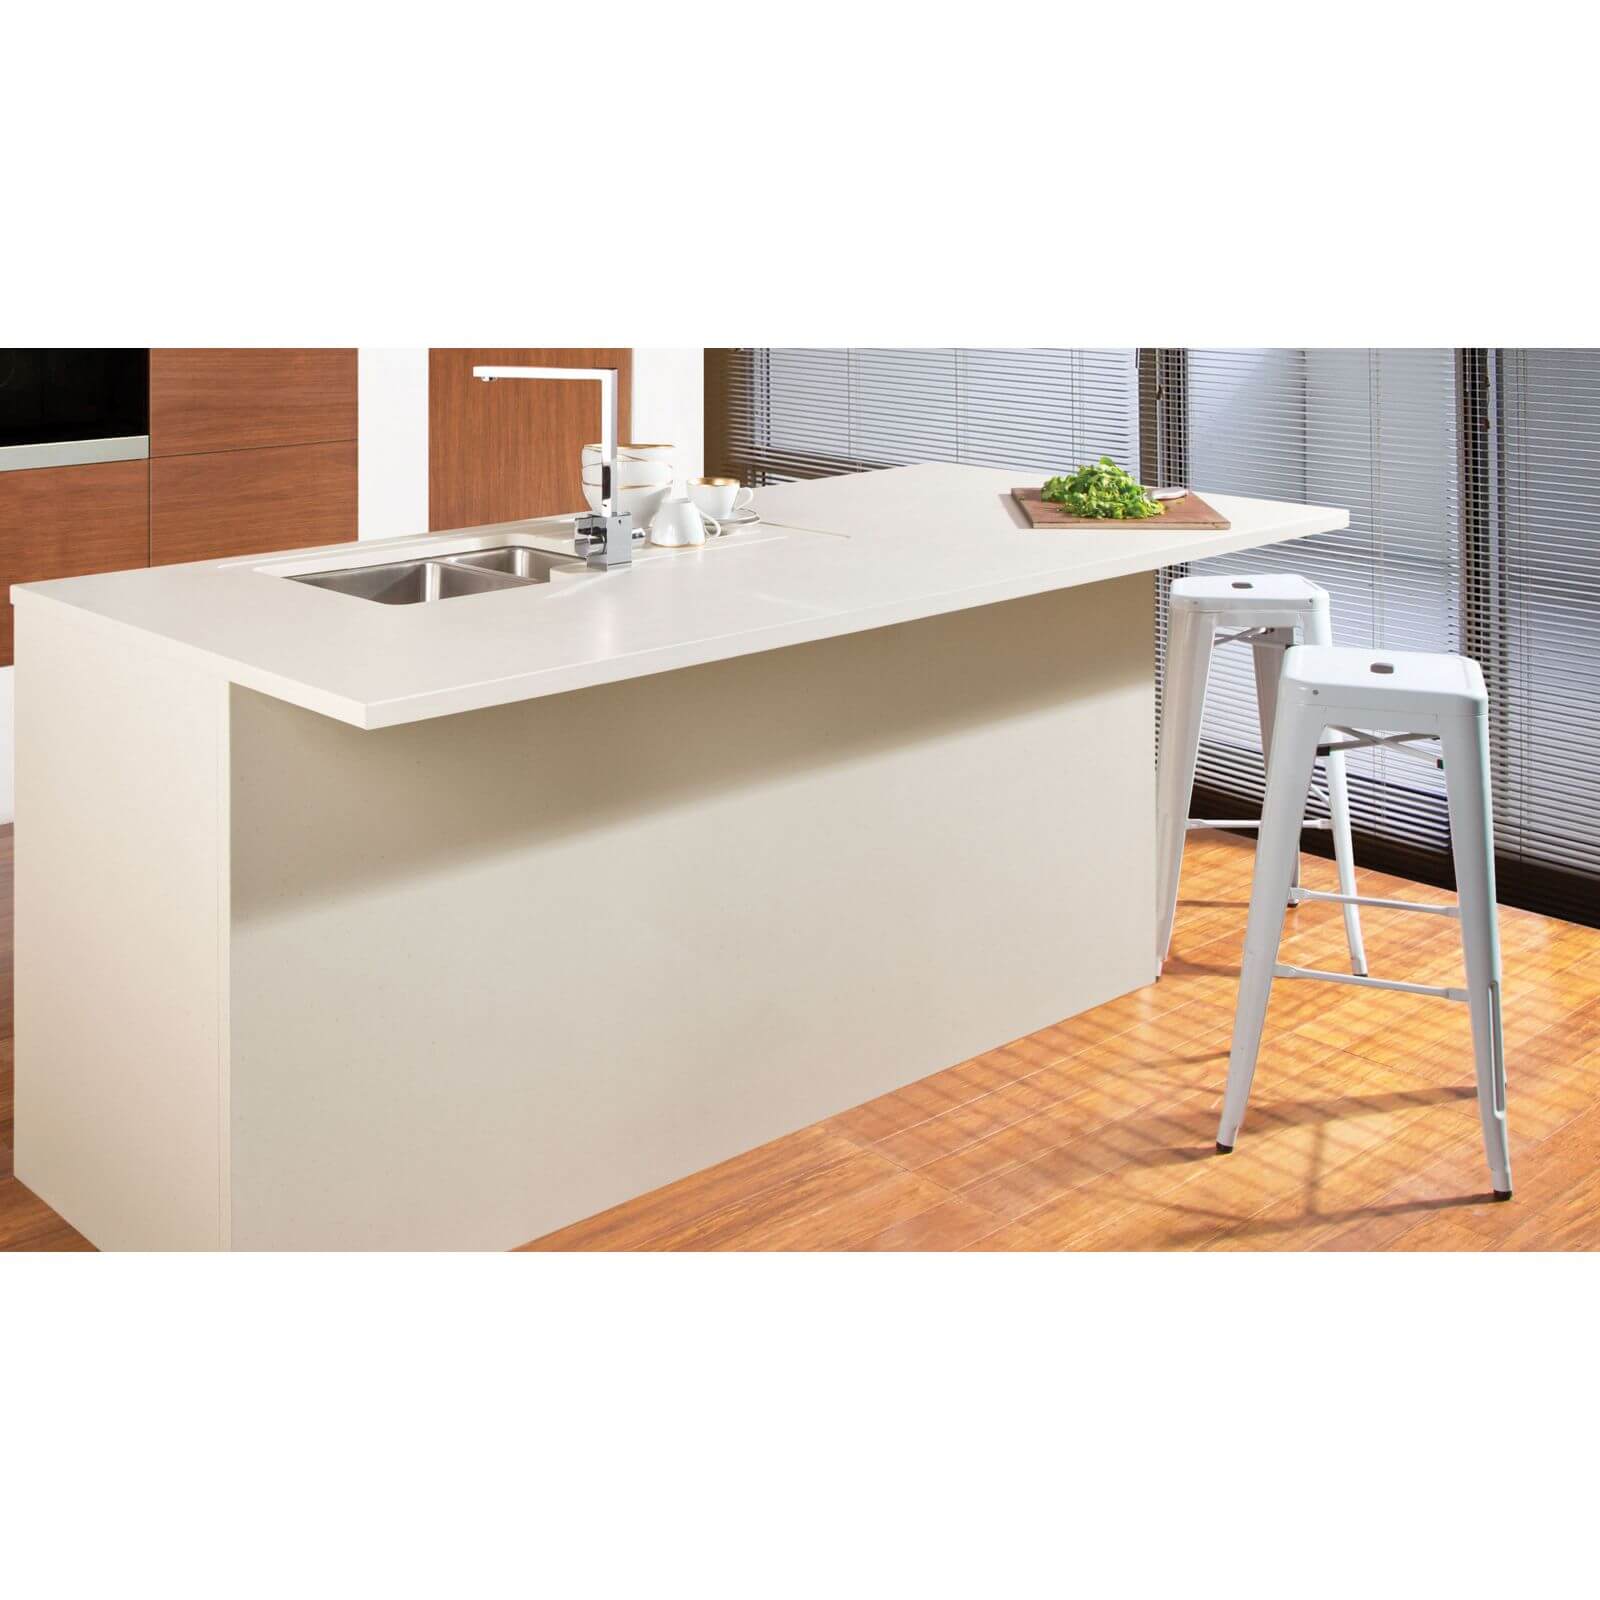 Maia Fossil Kitchen Sink Worktop - Universal Bowl - 3600 x 600 x 28mm